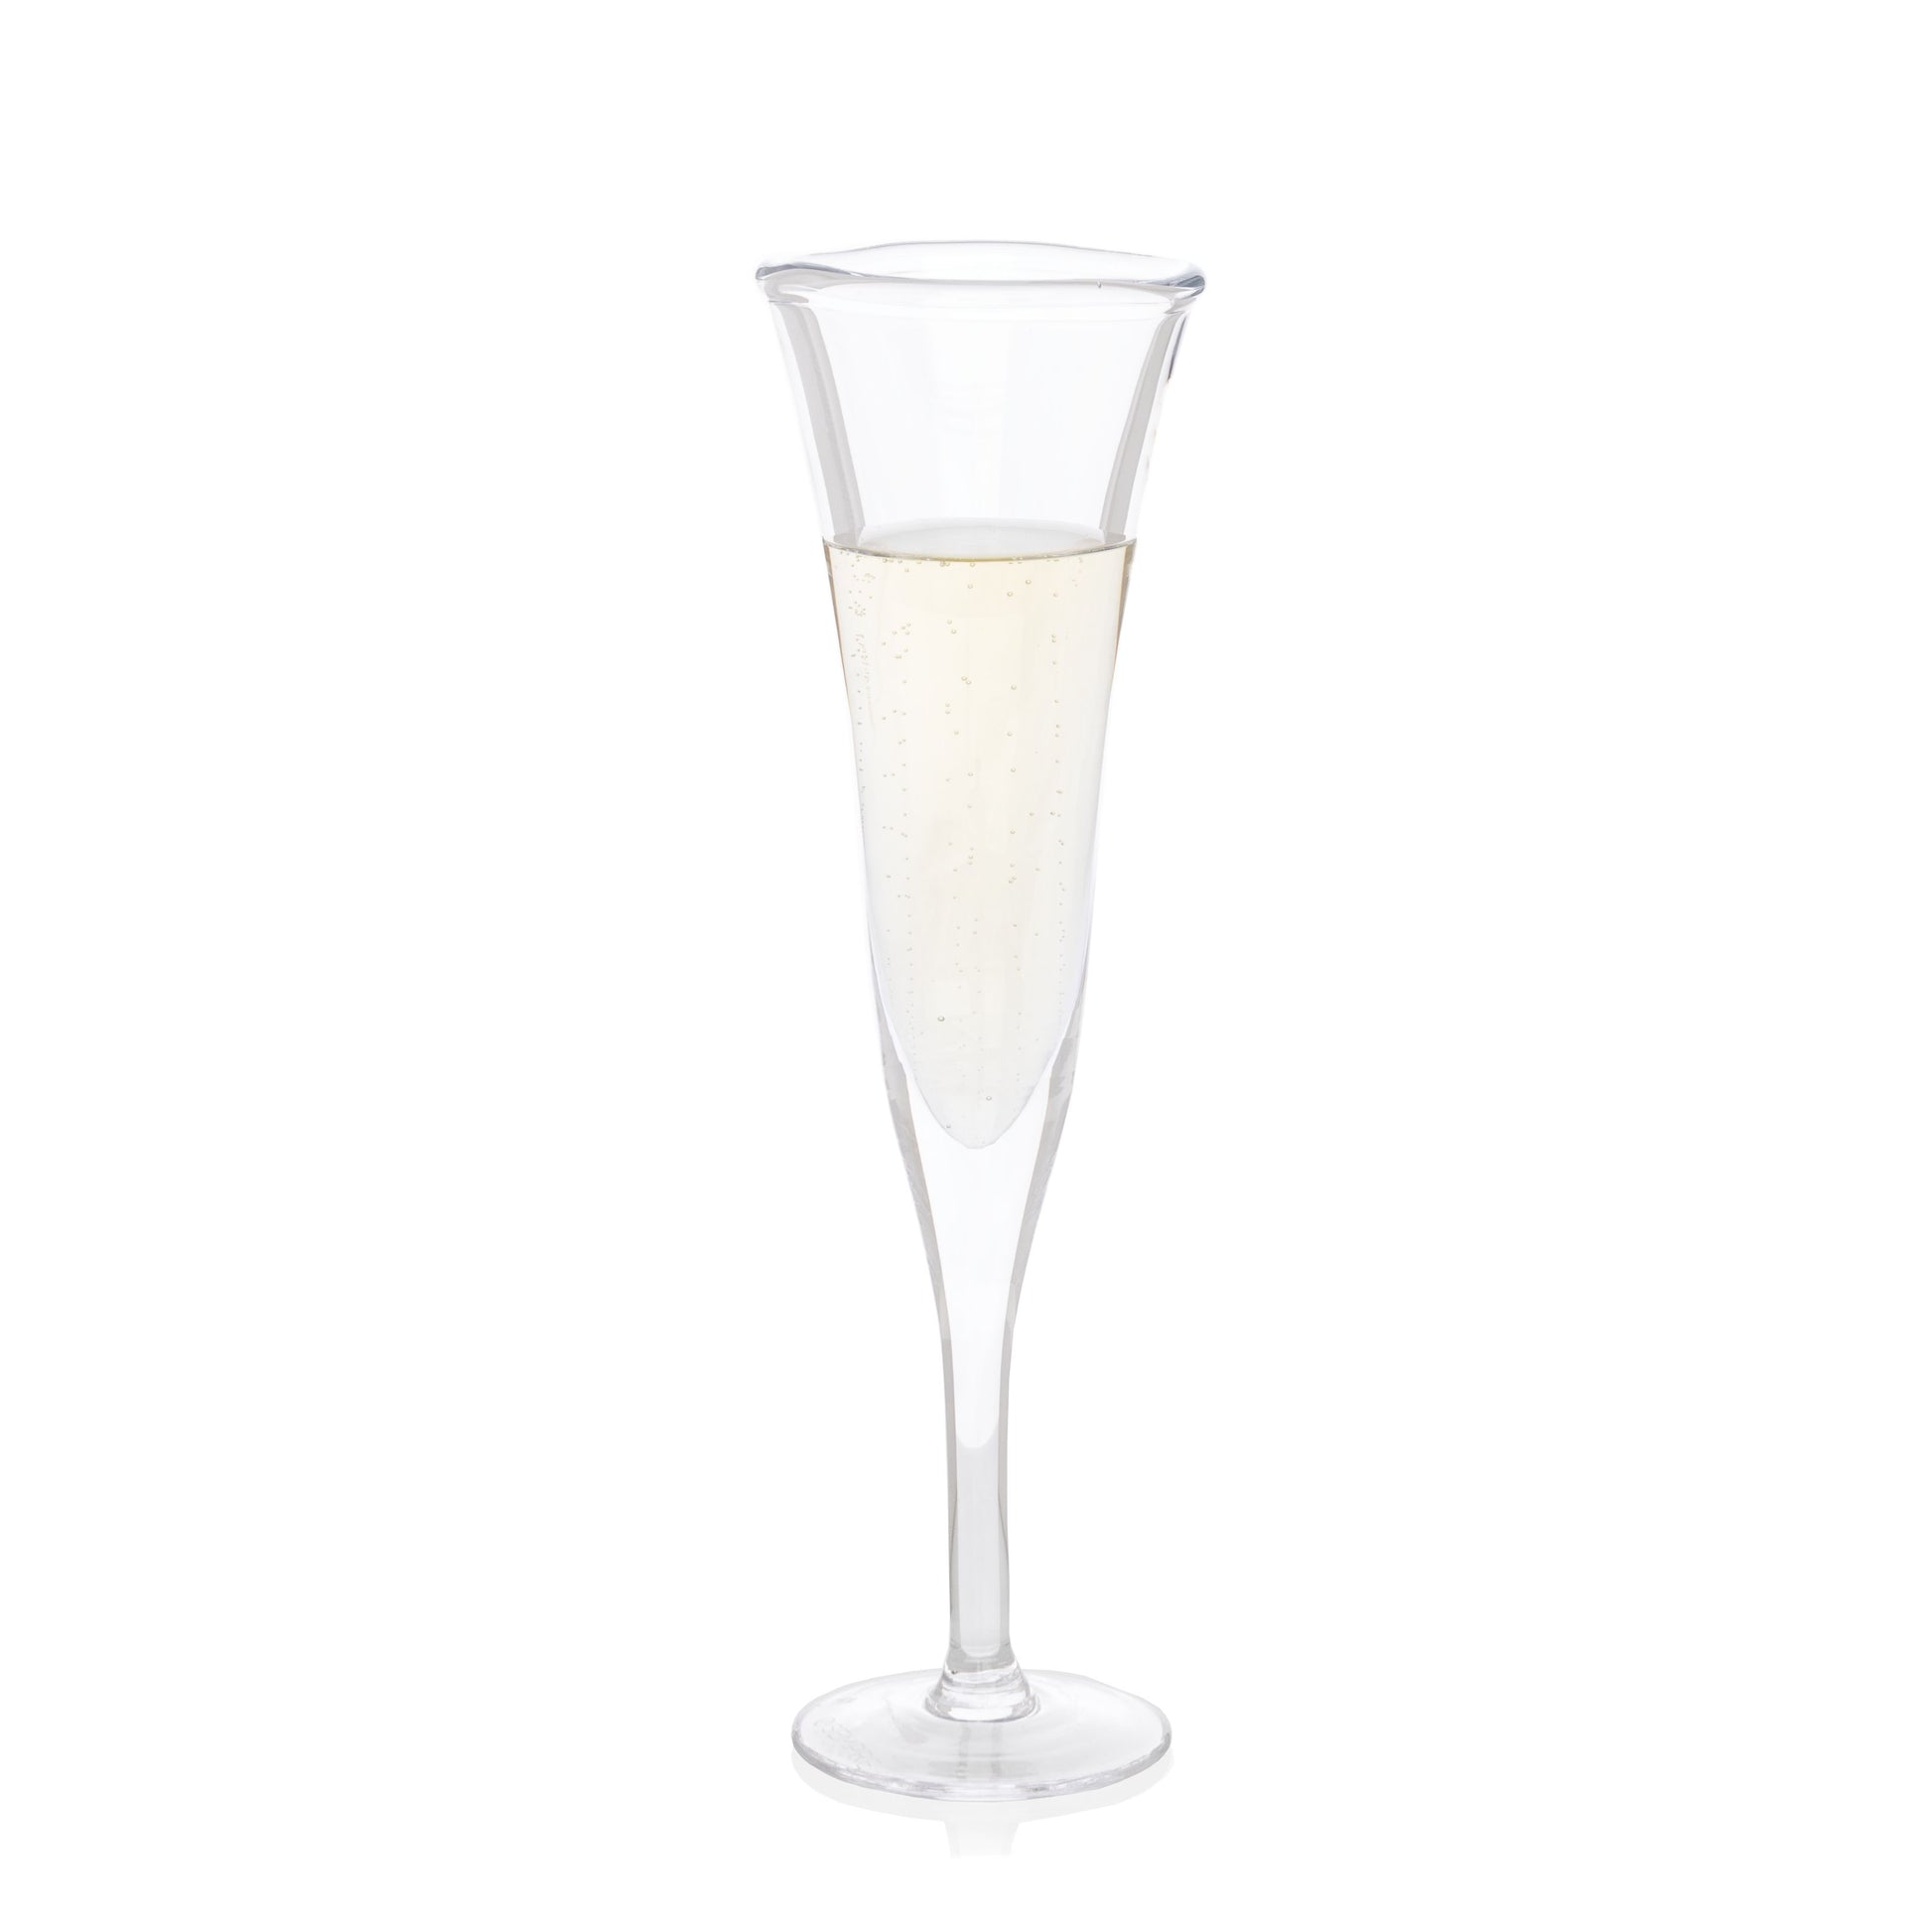 Small artisan champagne glass